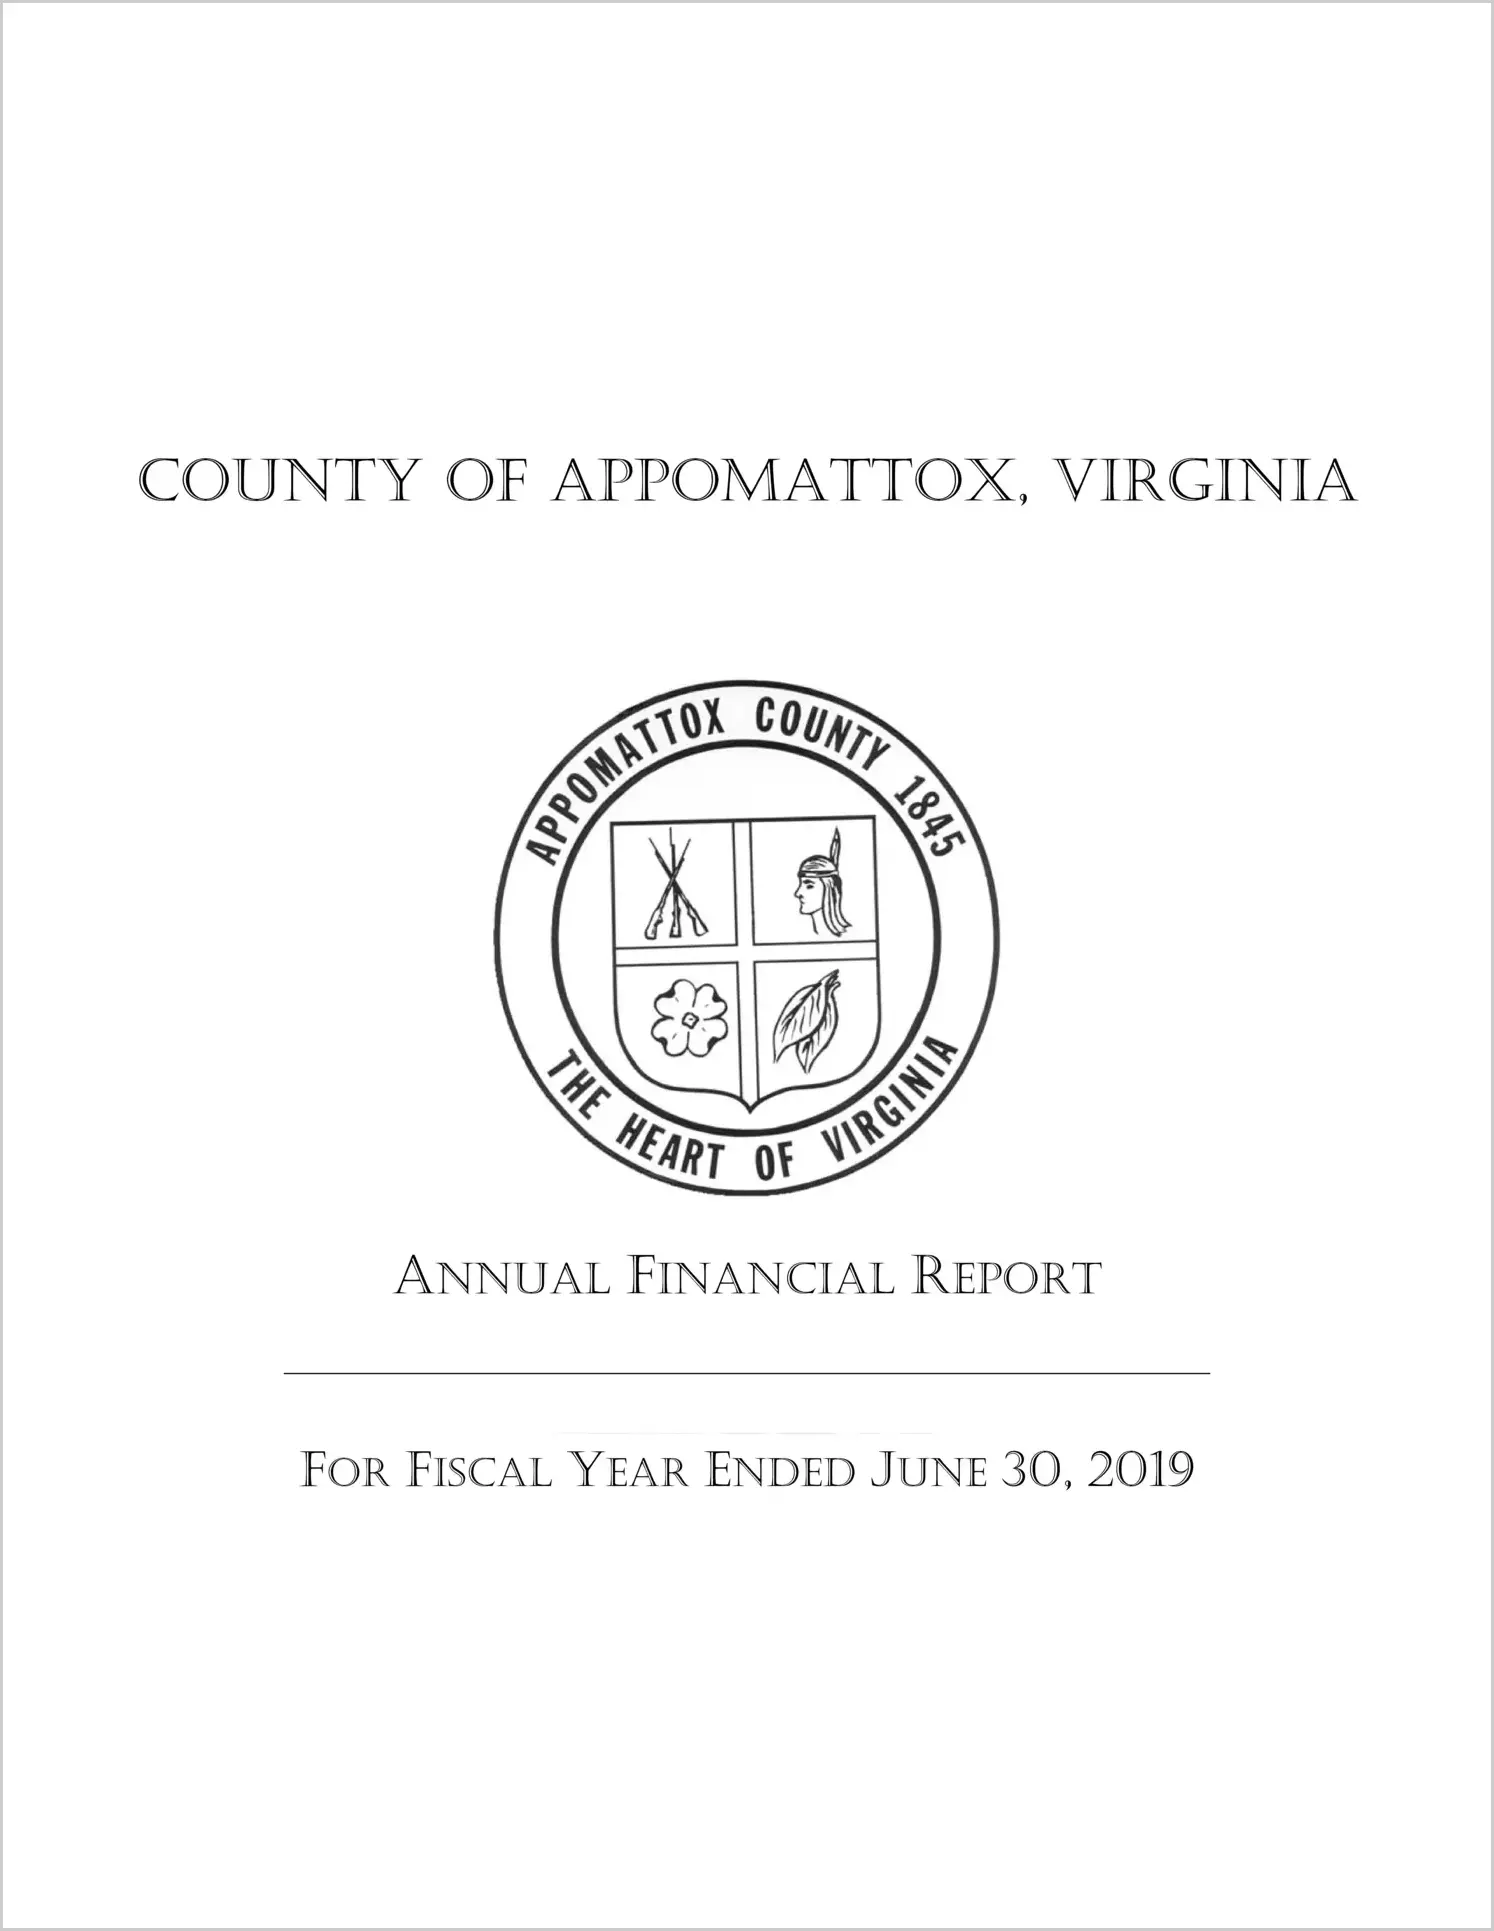 2019 Annual Financial Report for County of Appomattox